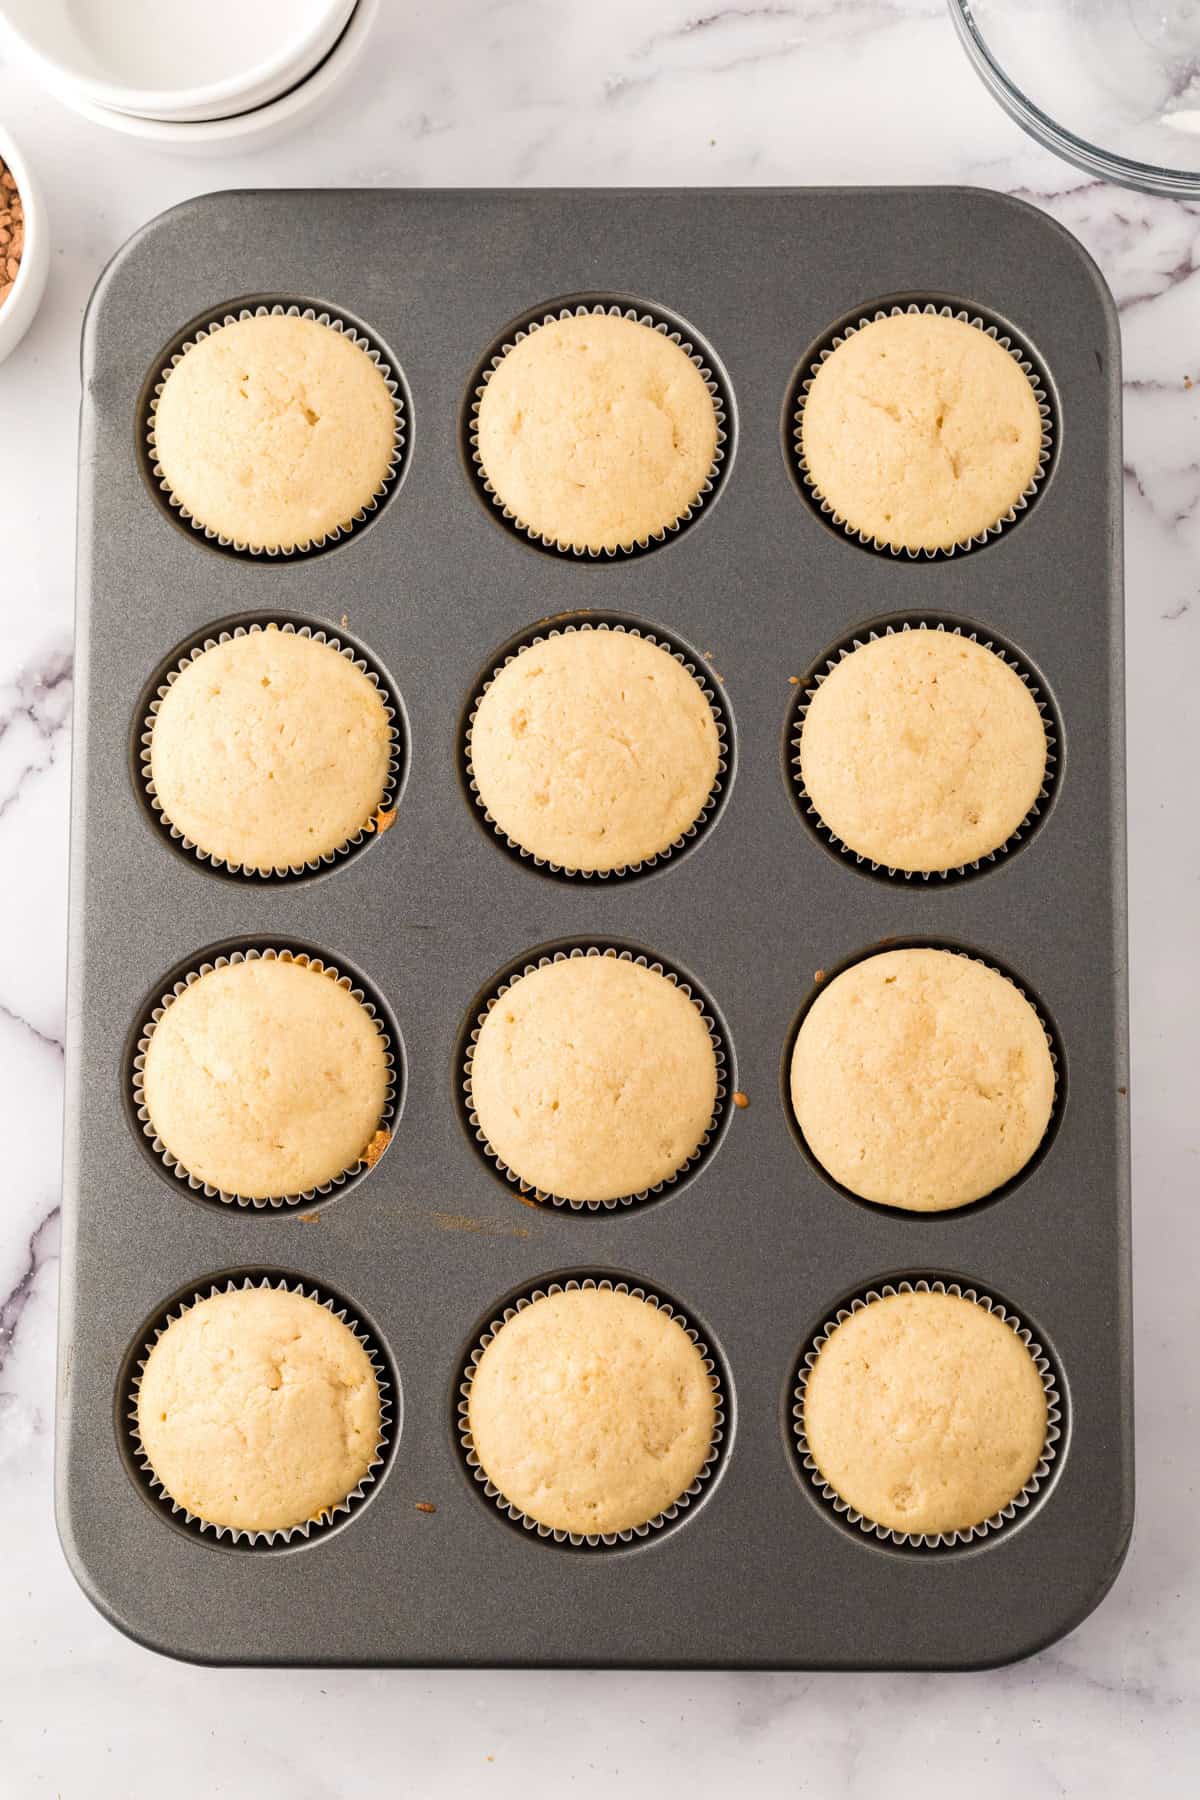 12 freshly baked vanilla cupcakes in the tin.